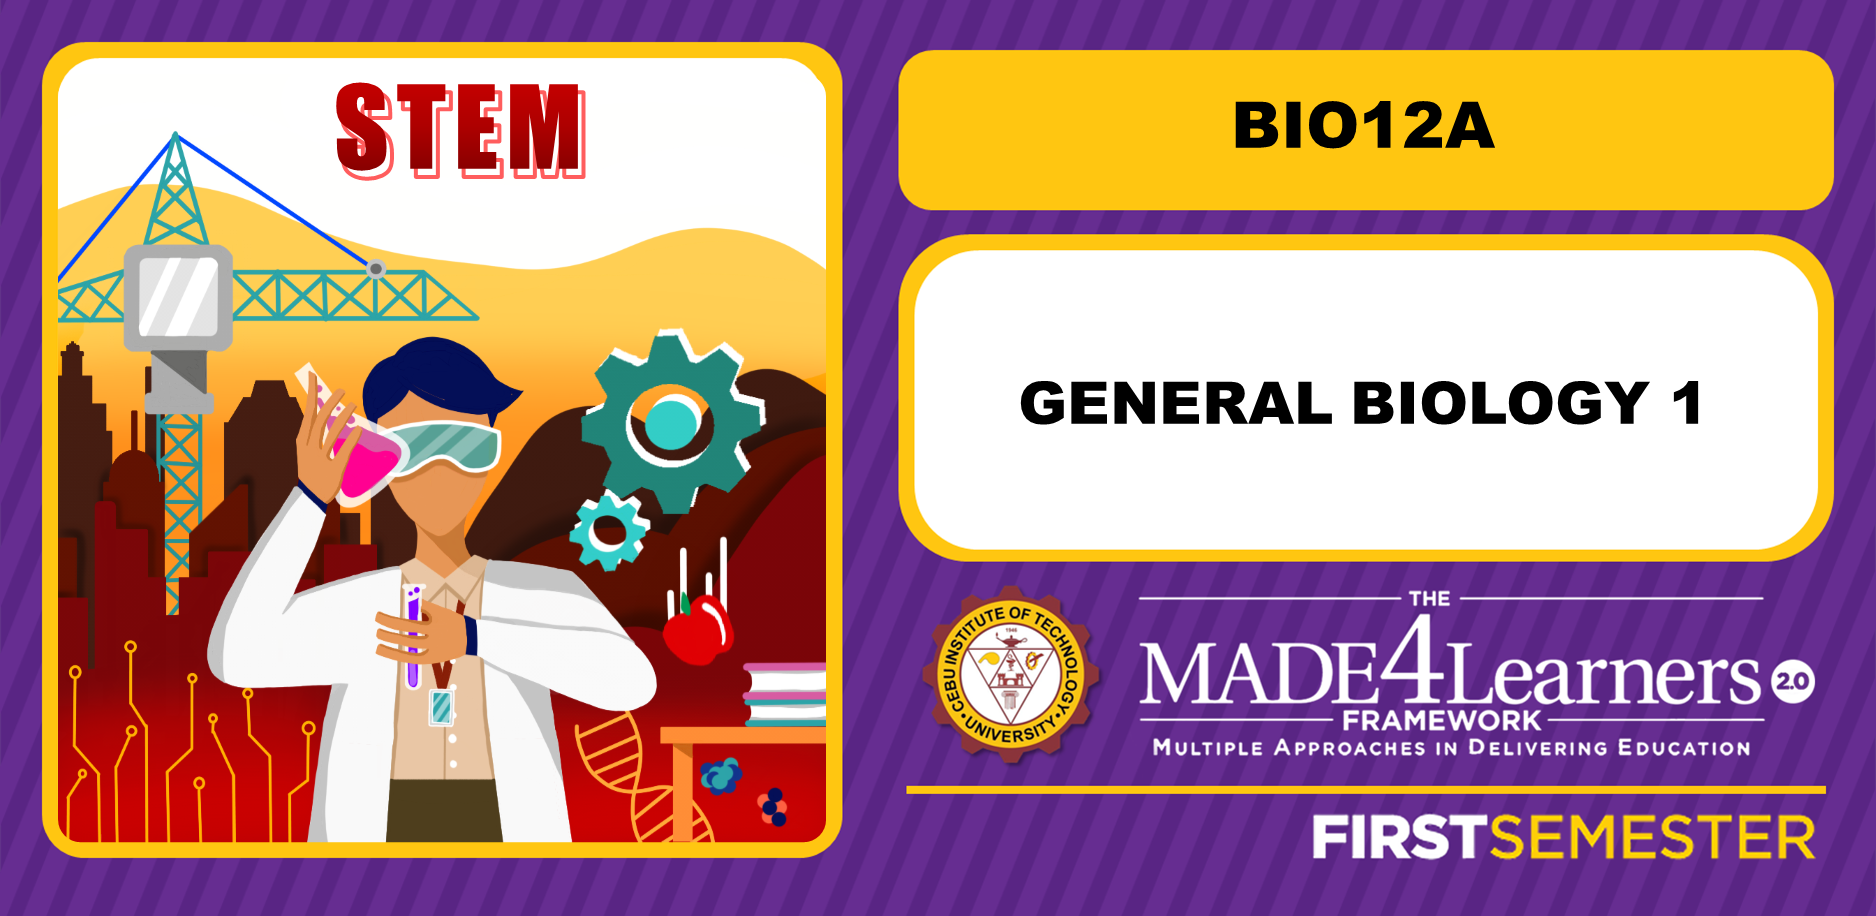 BIO12A: General Biology 1